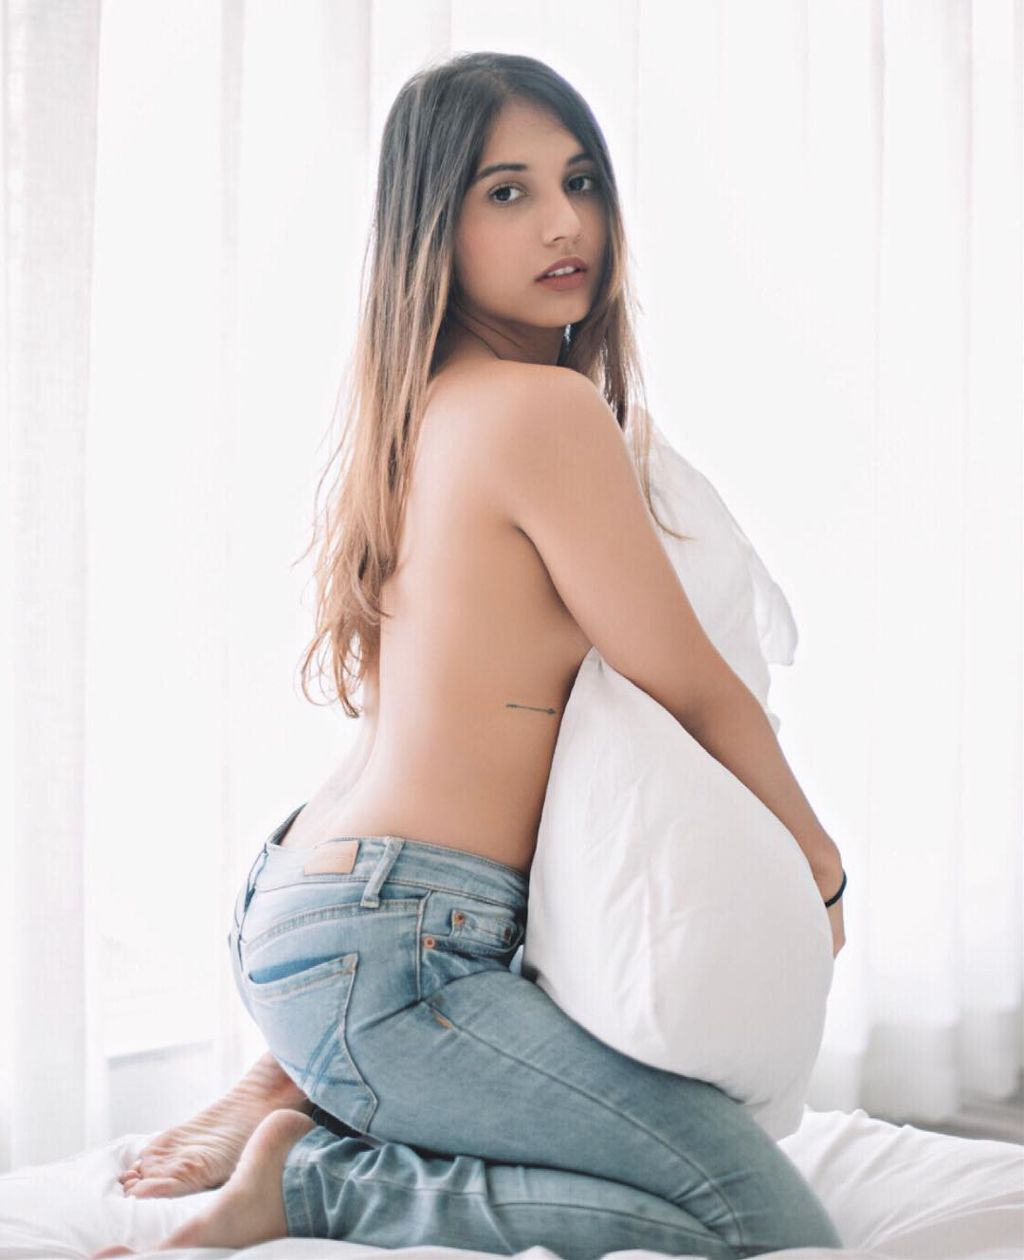 Indian girls beautiful ass